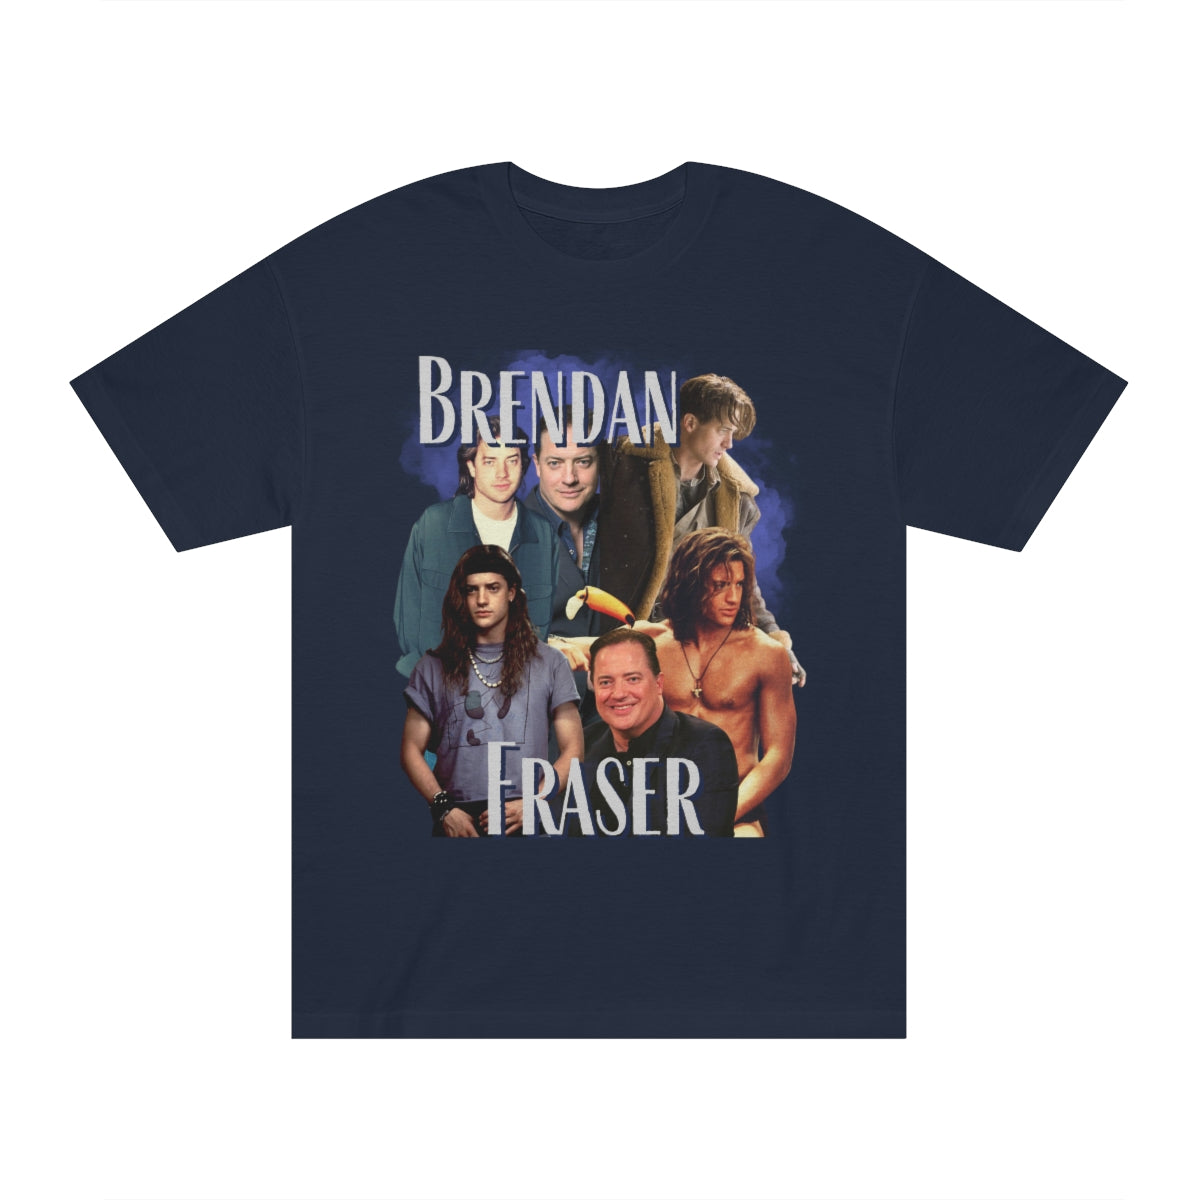 Brendan Fraser Shirt, Bootleg Vintage Shirt